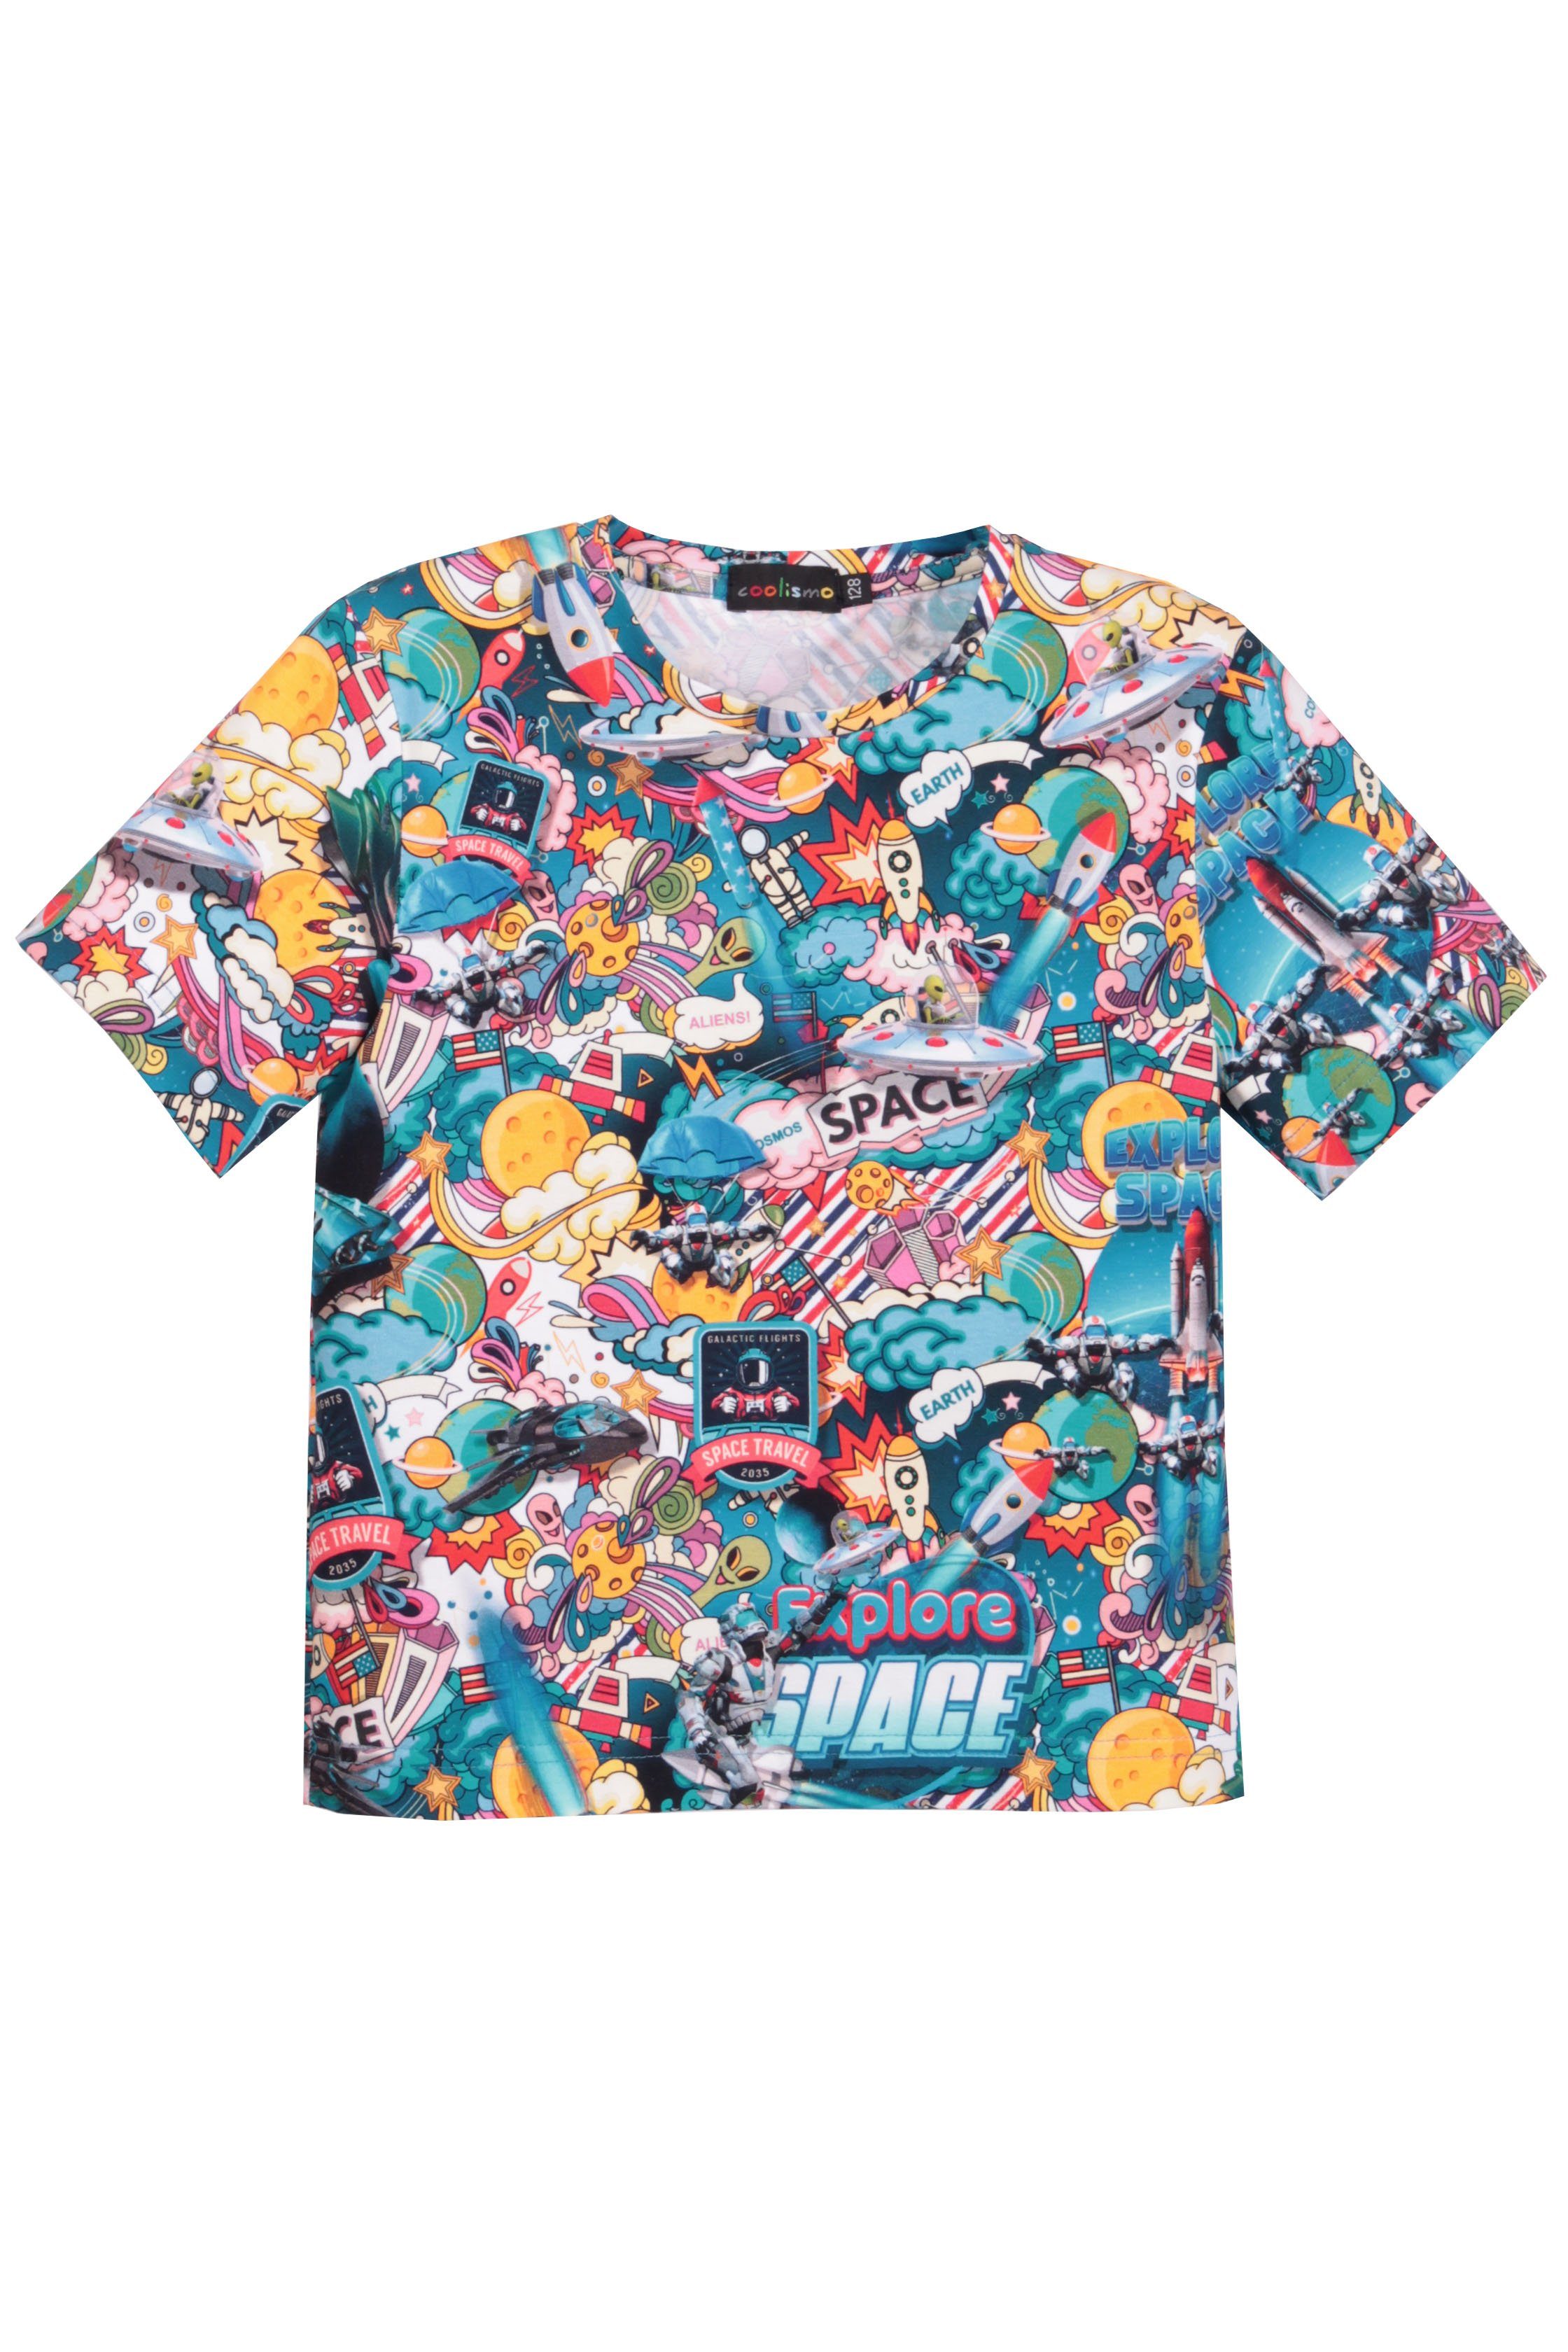 Jungen T-Shirt Comic-Raketen-Motiv coolismo für Baumwolle mit Print-Shirt Alloverprint, Rundhalsauschnitt,